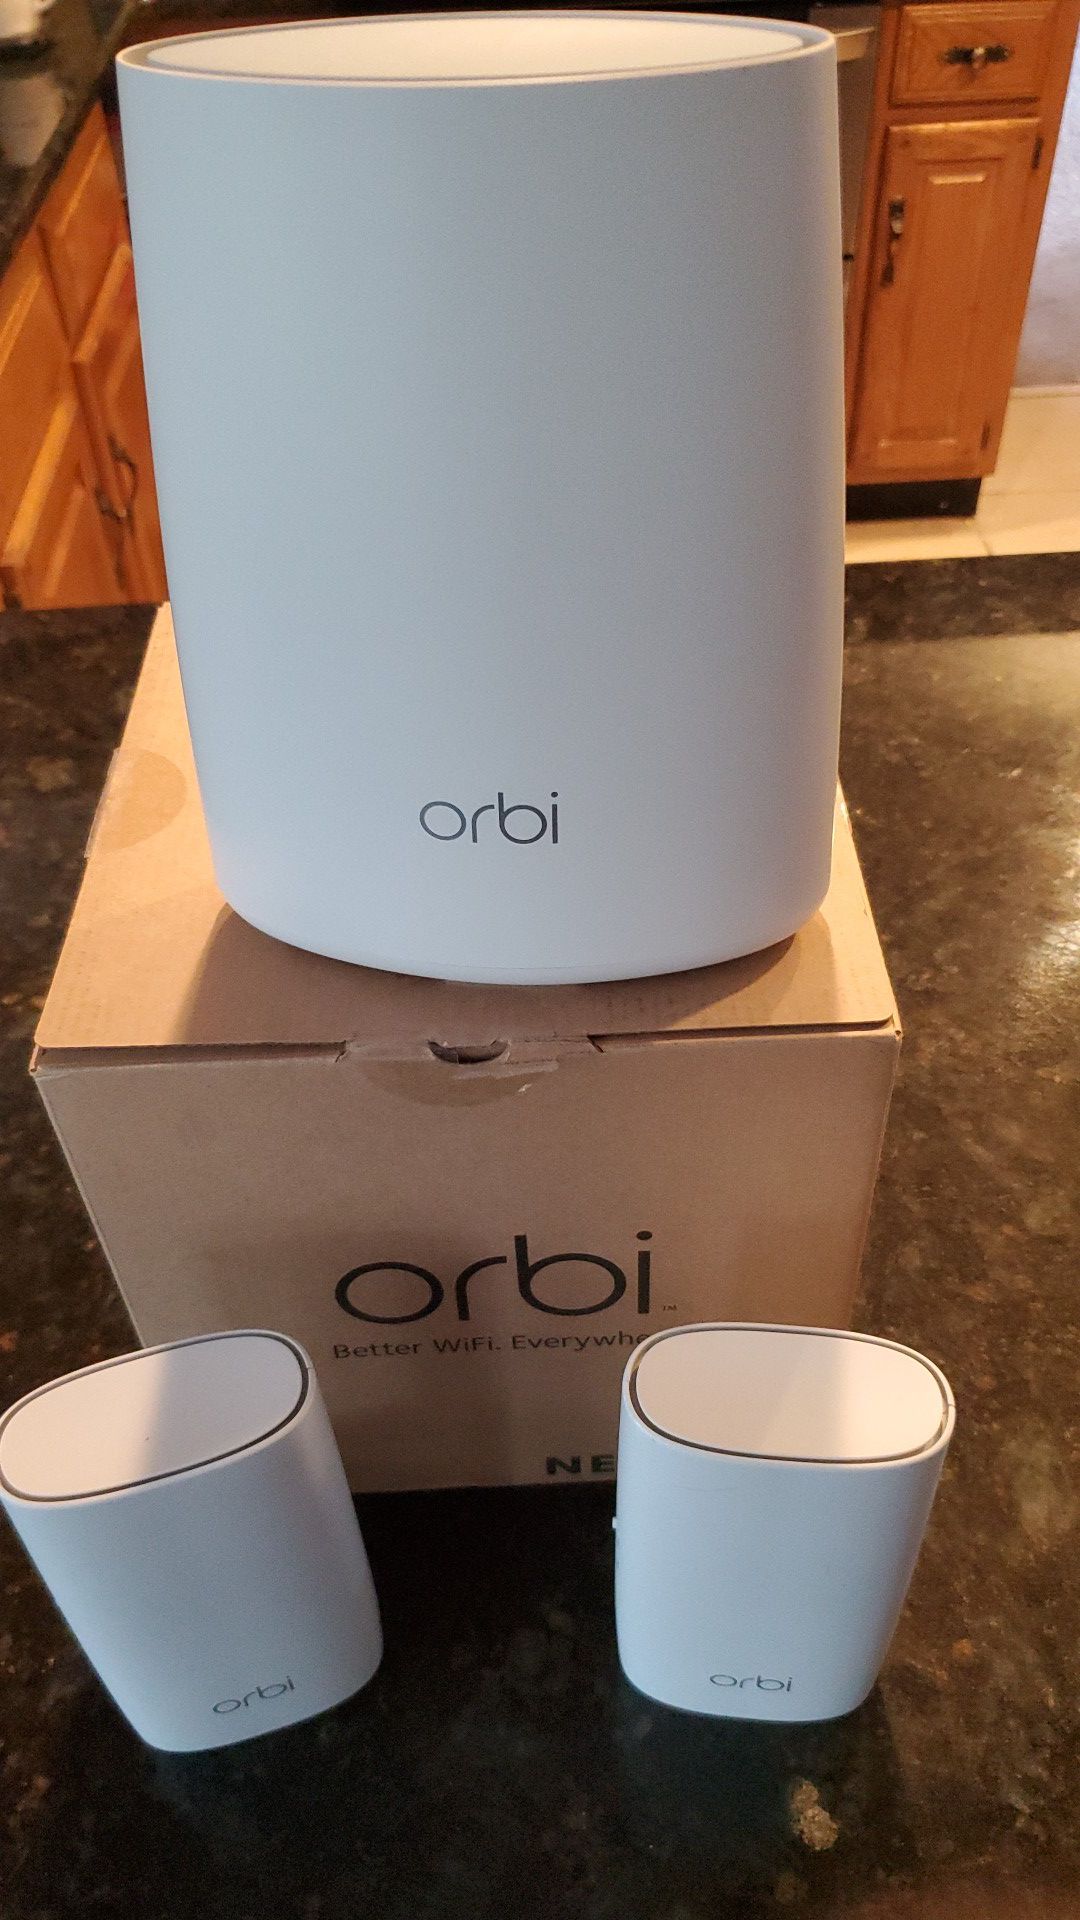 Orbi wireless mesh router